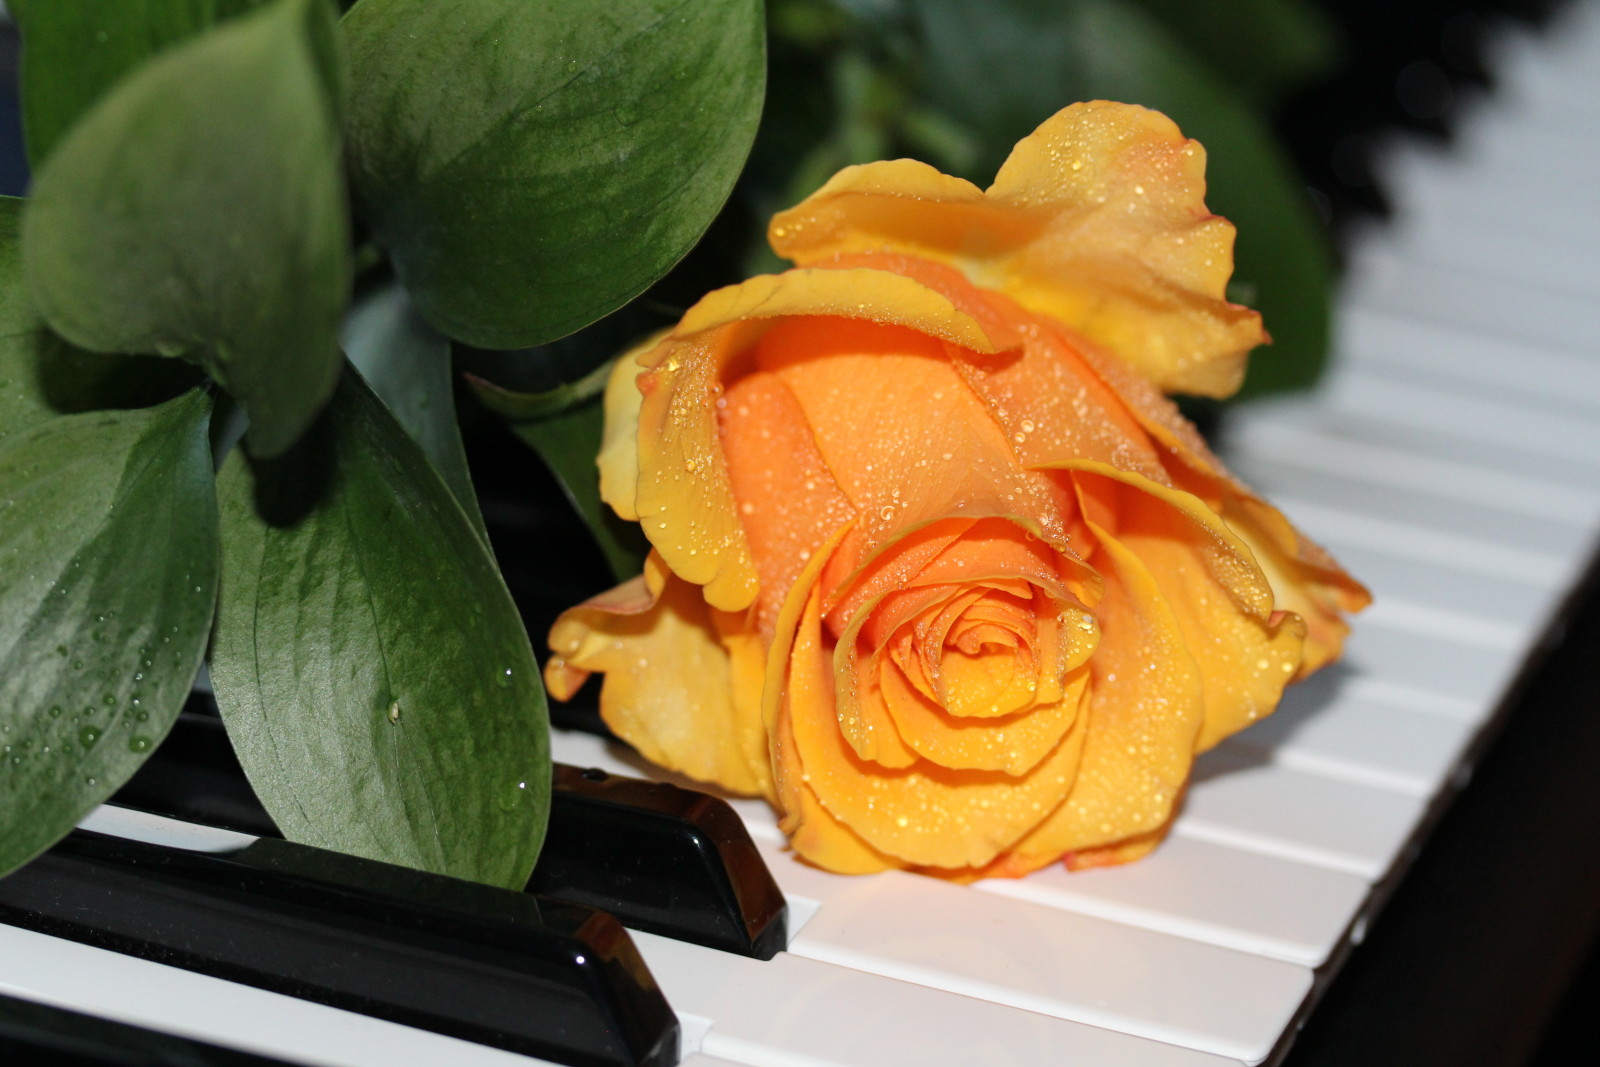 mawar, Musik, piano